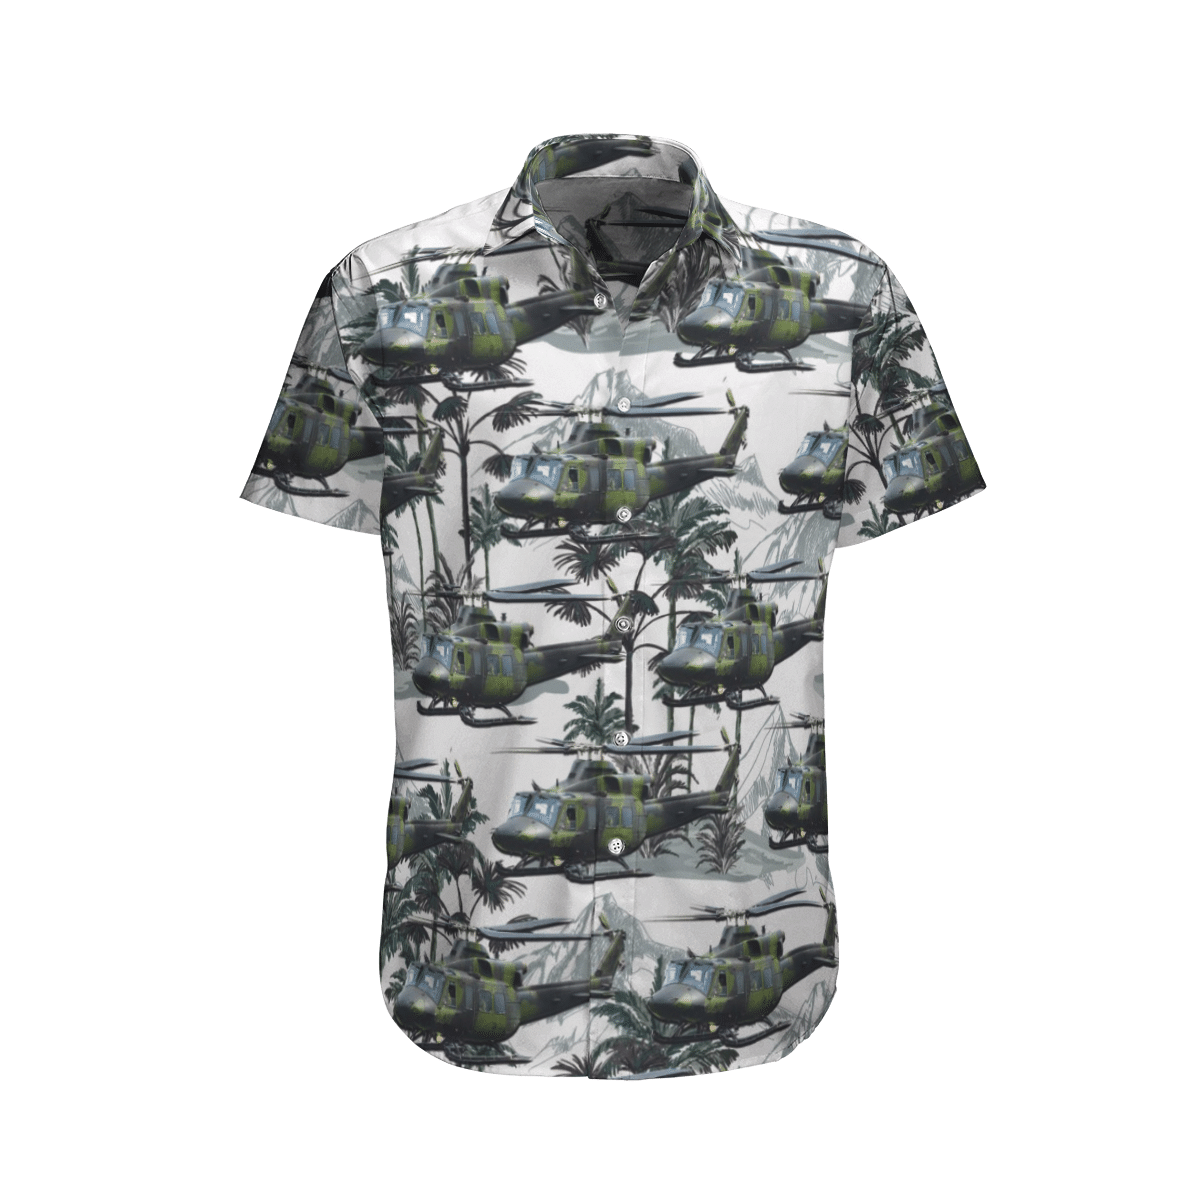 Get a new Hawaiian shirt to enjoy summer vacation 86